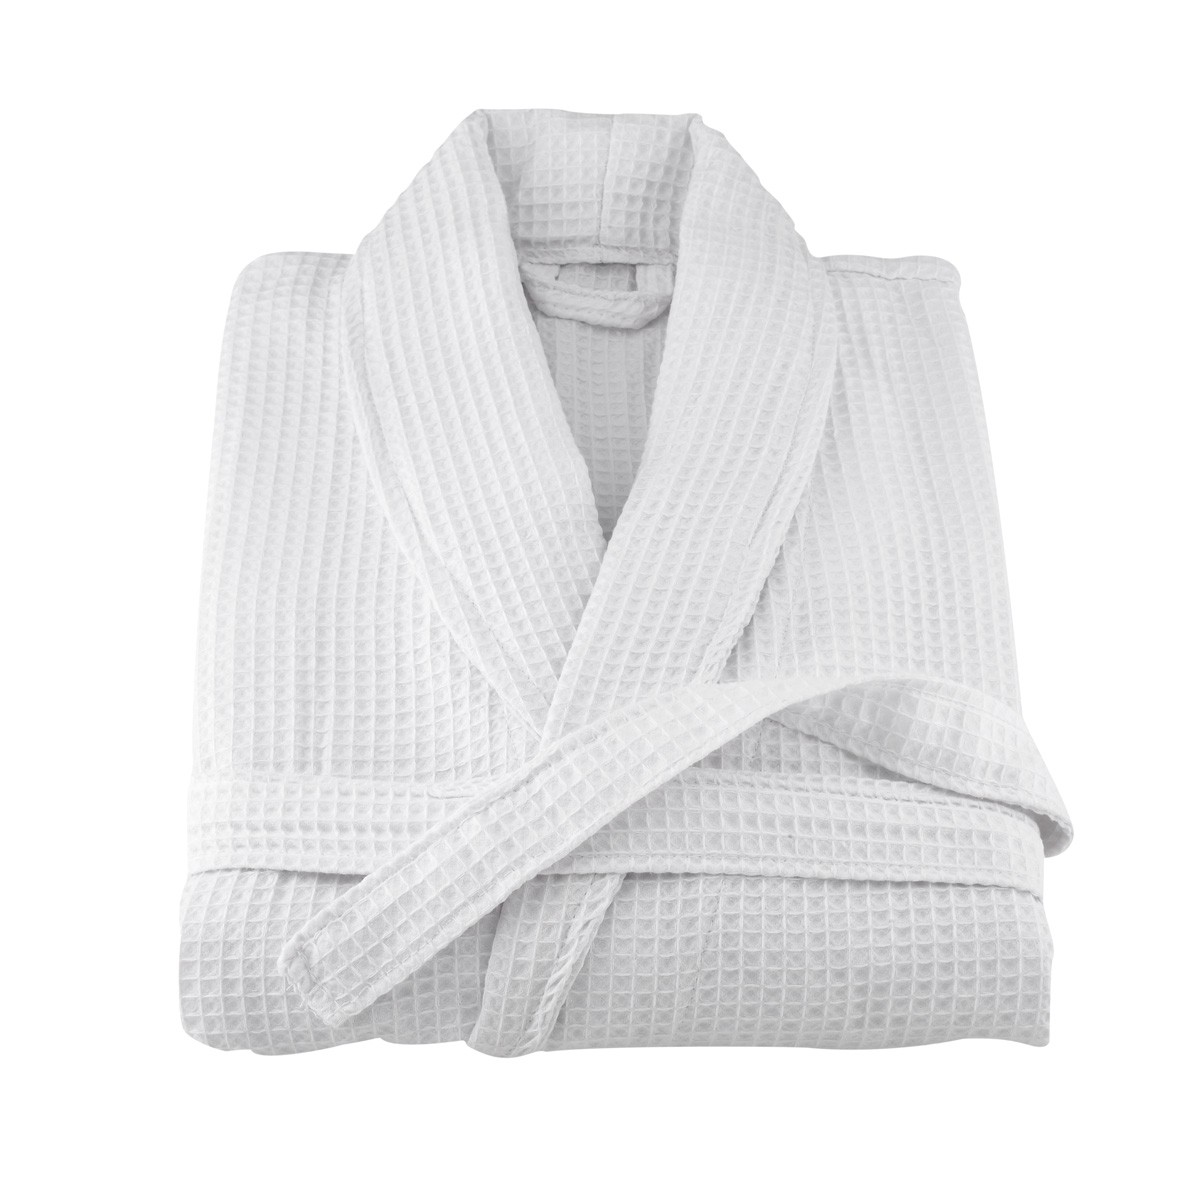 Mini Balabala Unisex Waffle Dressing Gown Cotton Lightweight Bath Robe for All Seasons Spa Hotel Pool Sleepwear 